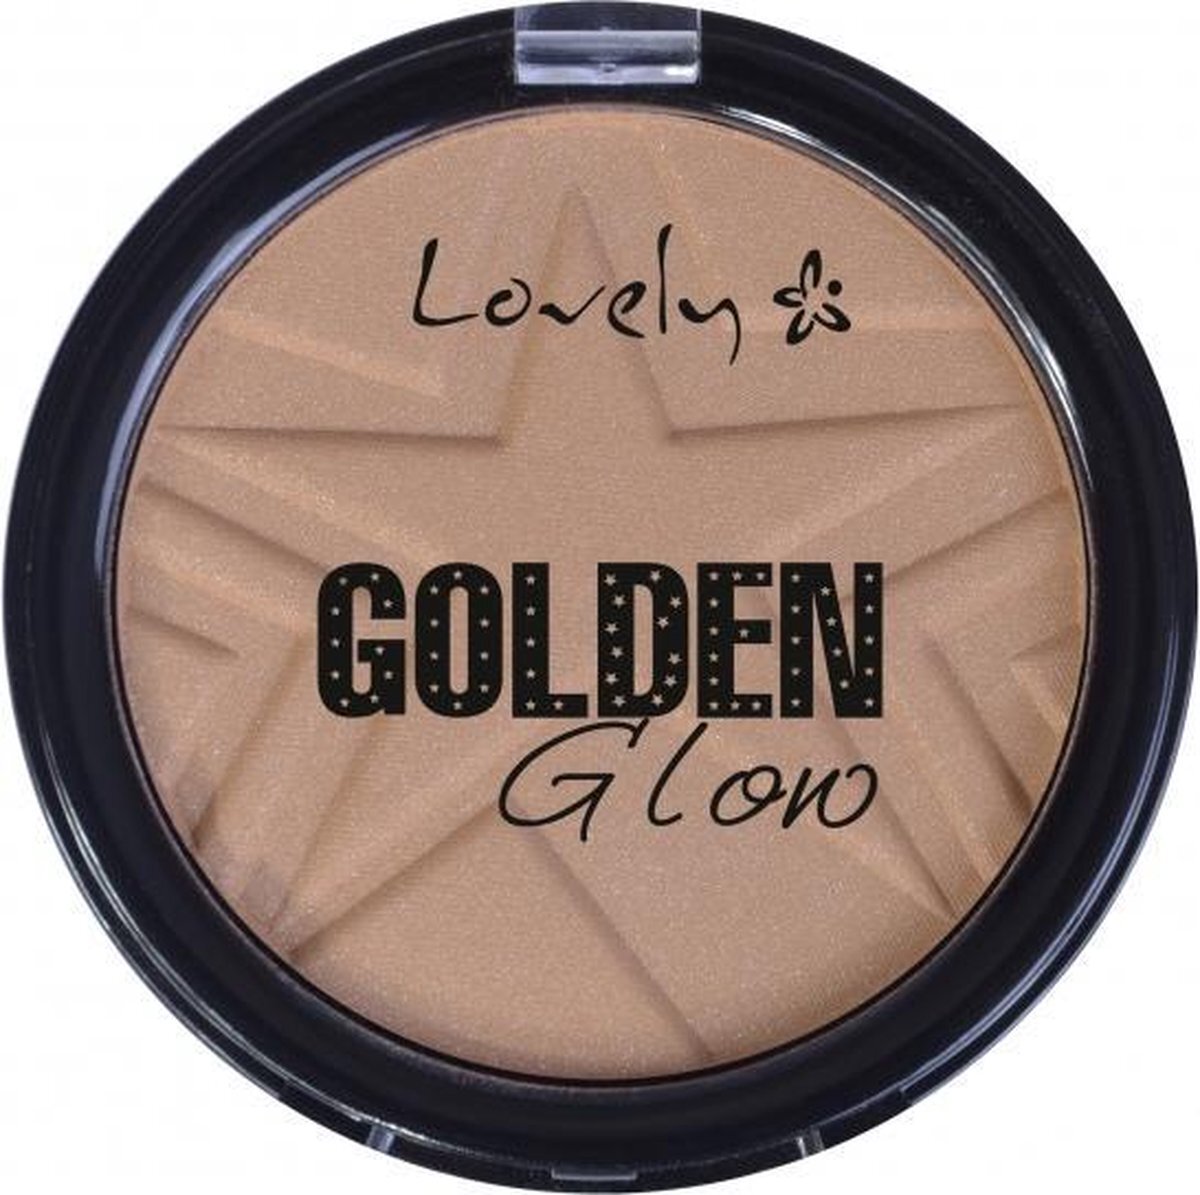 Lovely Golden Glow Powder #4